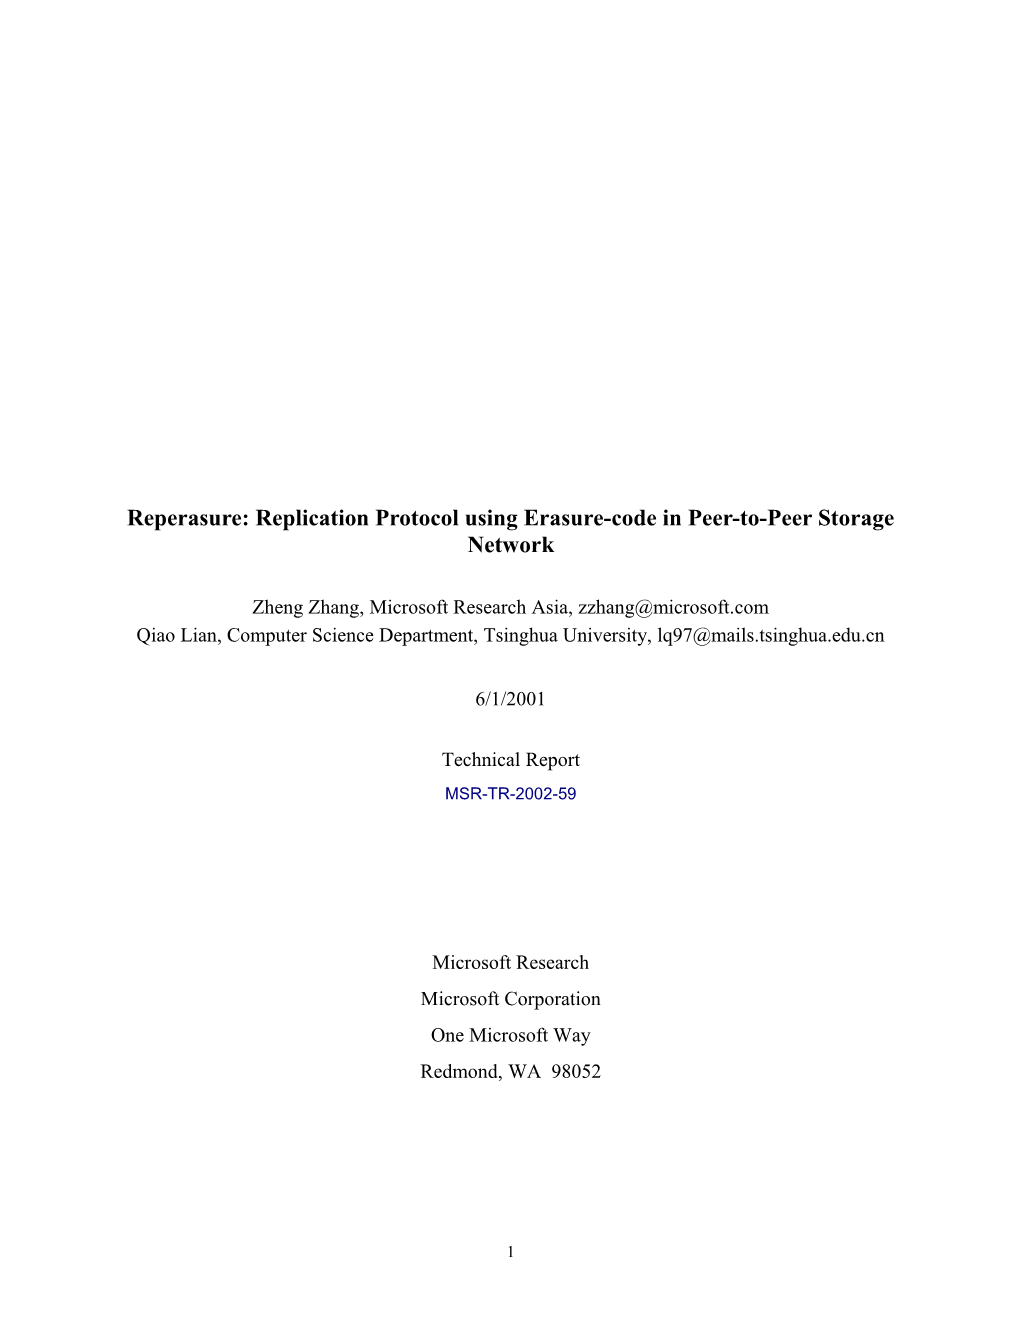 Reperasure: Replication Protocol Using Erasure-Code in Peer-To-Peer Storage Network